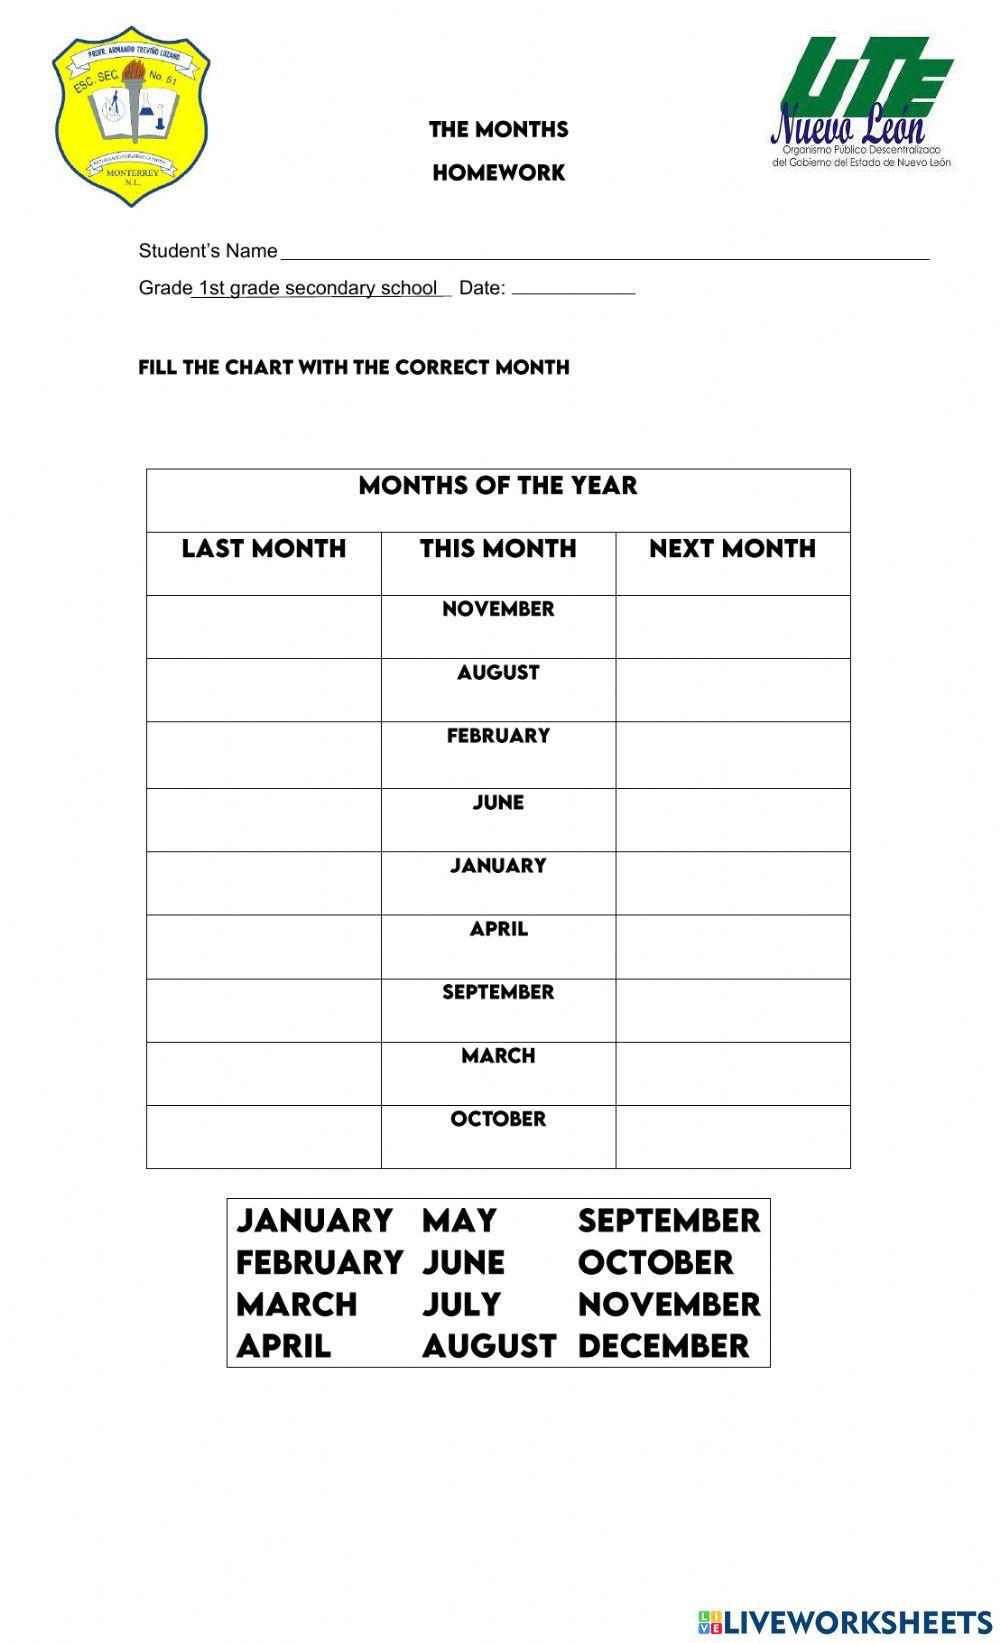 Homework: The months